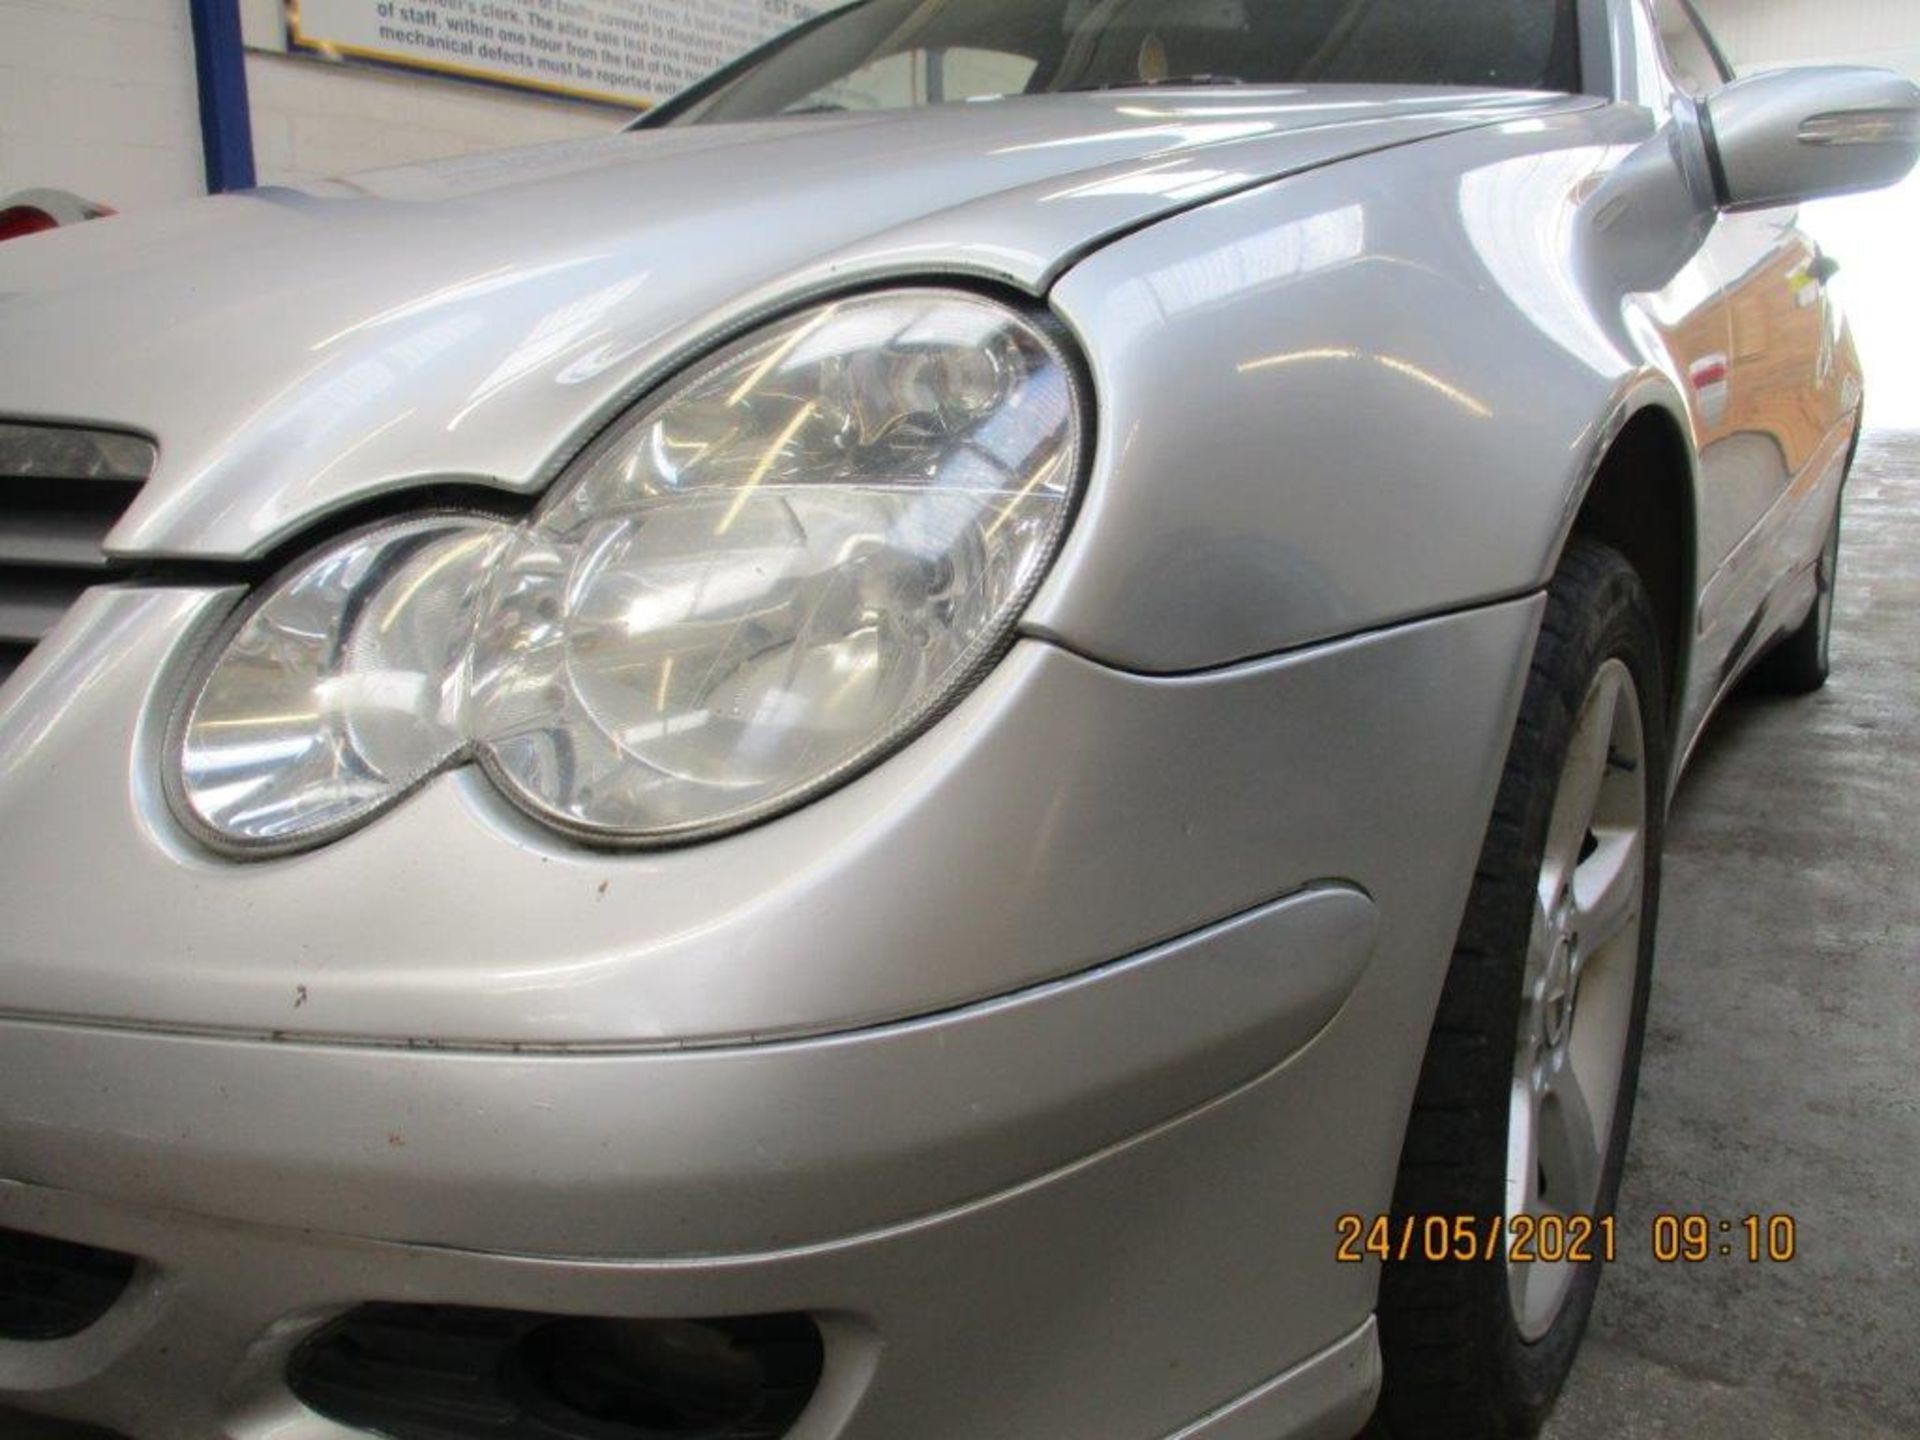 56 06 Mercedes C200 CDI SE - Image 10 of 21